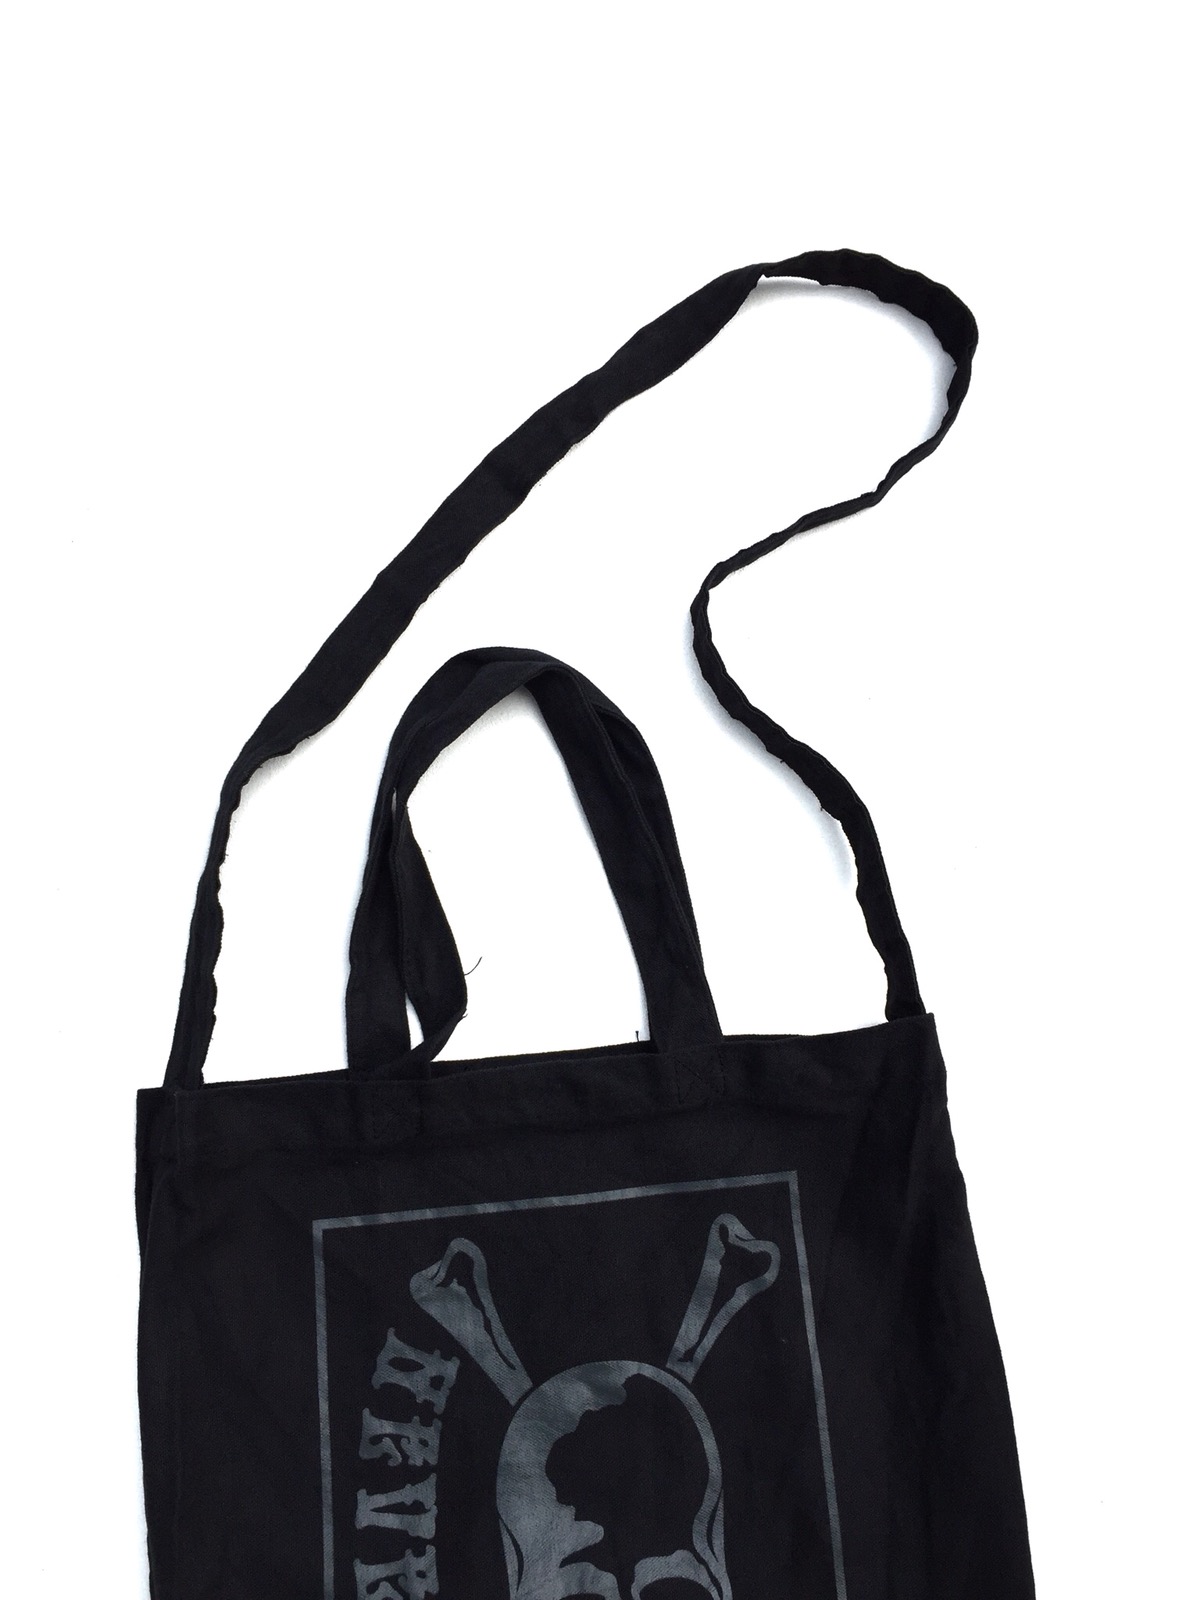 Japanese Brand Roen Tote Sling Bag - 4